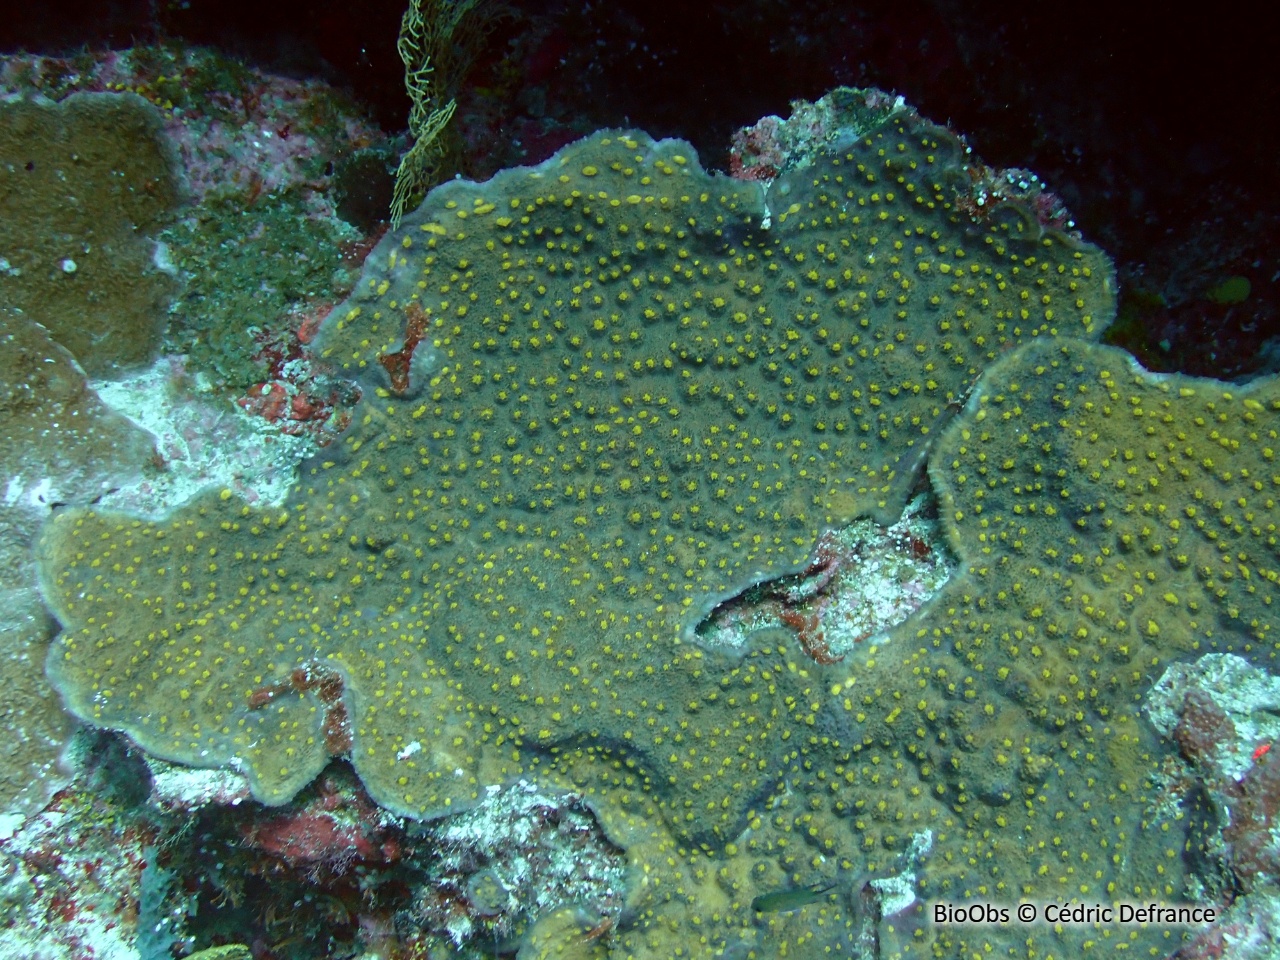 Corail-feuille rugueuse - Echinophyllia aspera - Cédric Defrance - BioObs